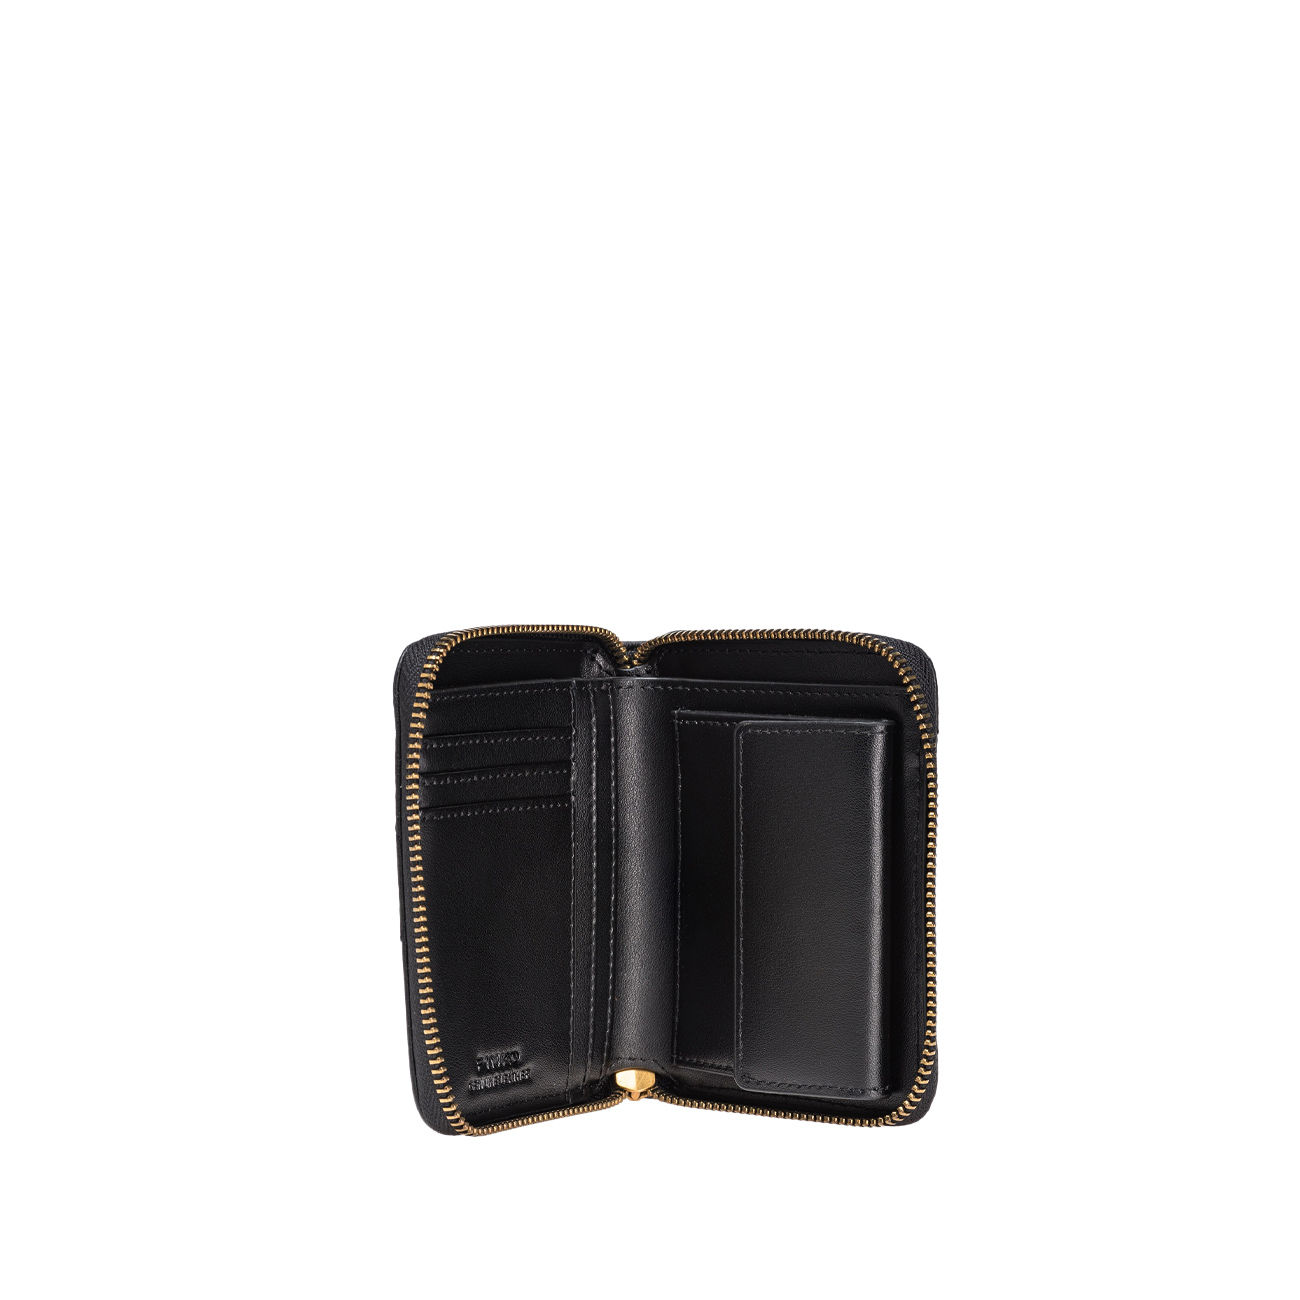 Saint Laurent Men's Leather Zip Card Holder, Nero, Men's, Small Leather Goods Card Cases & Card Holders